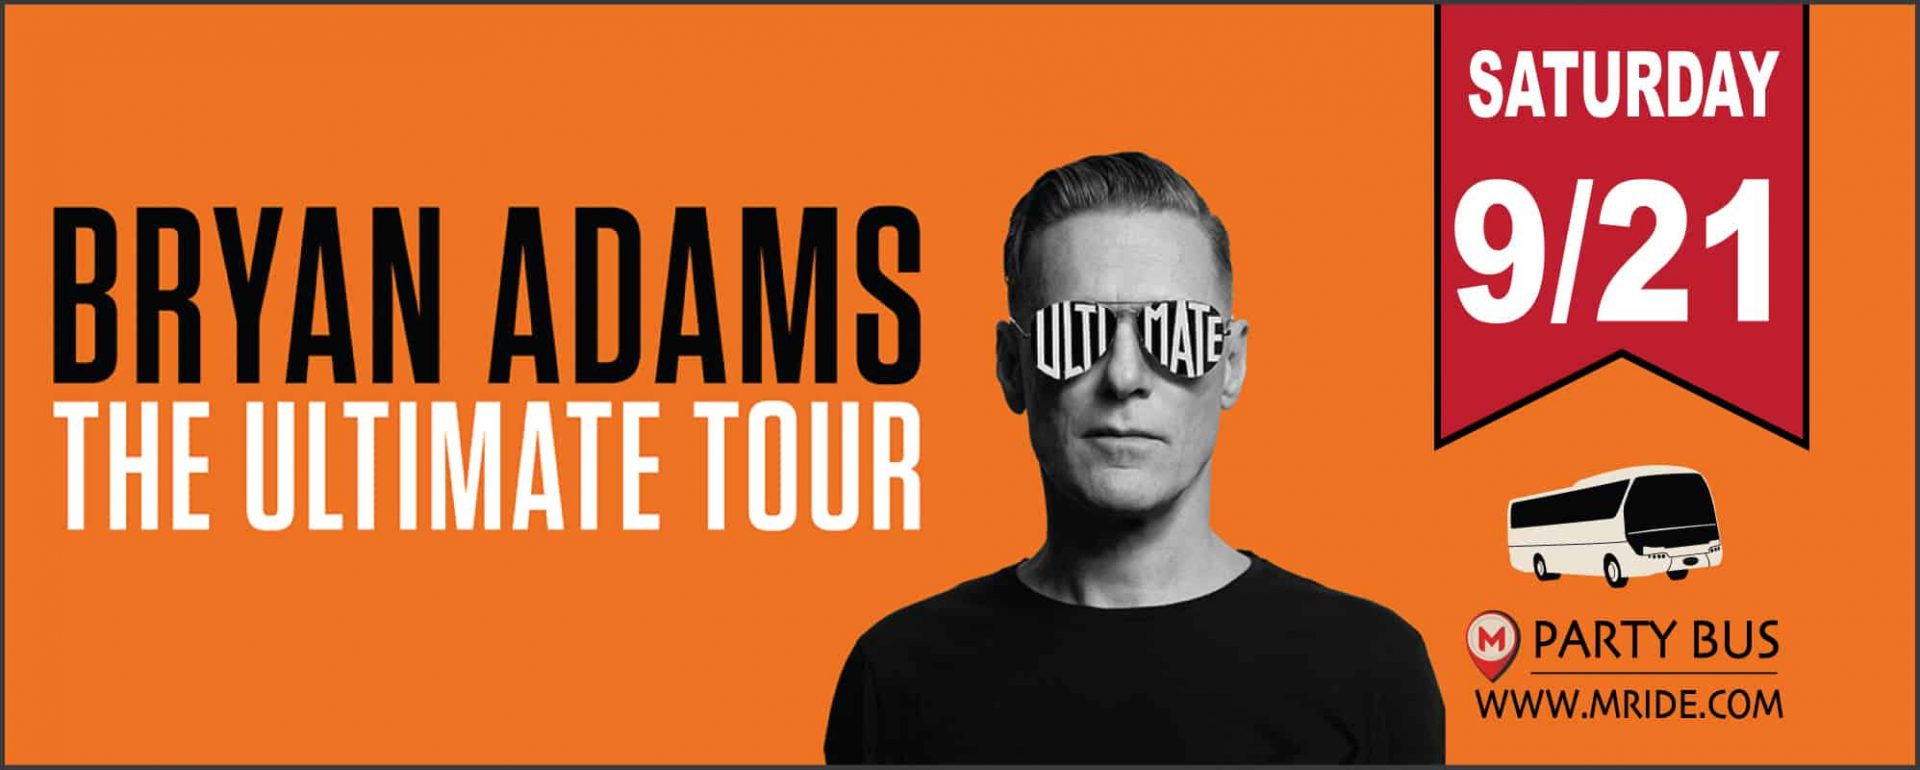 Bryan Adams The Ultimate Tour